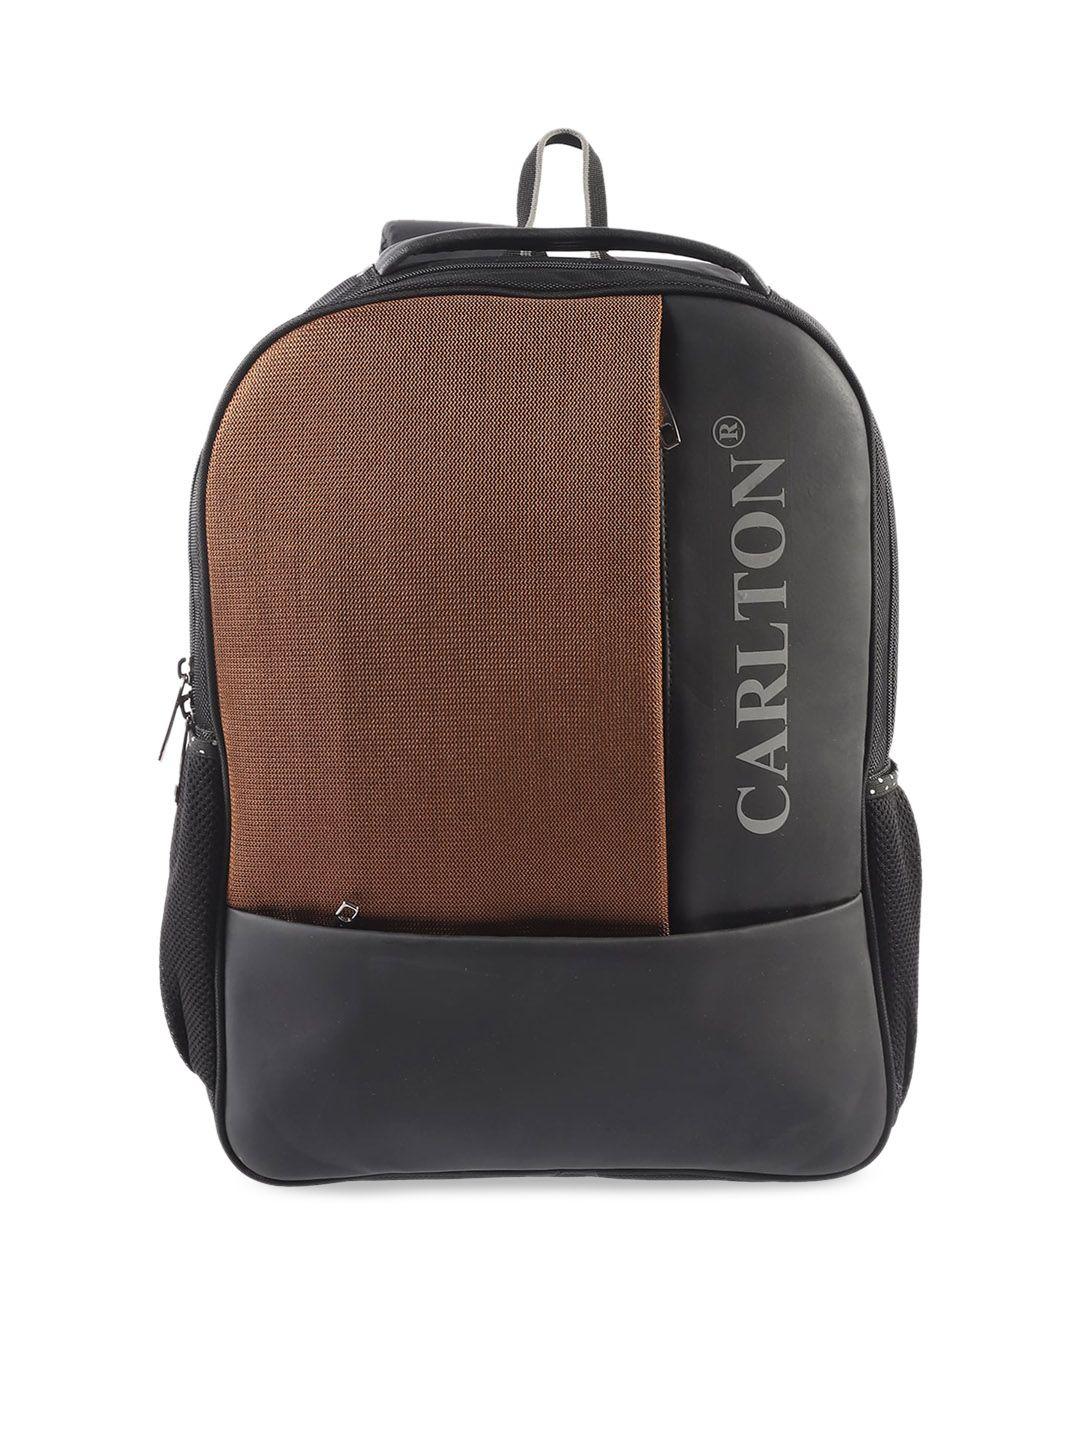 carlton london unisex black & brown colourblocked backpack